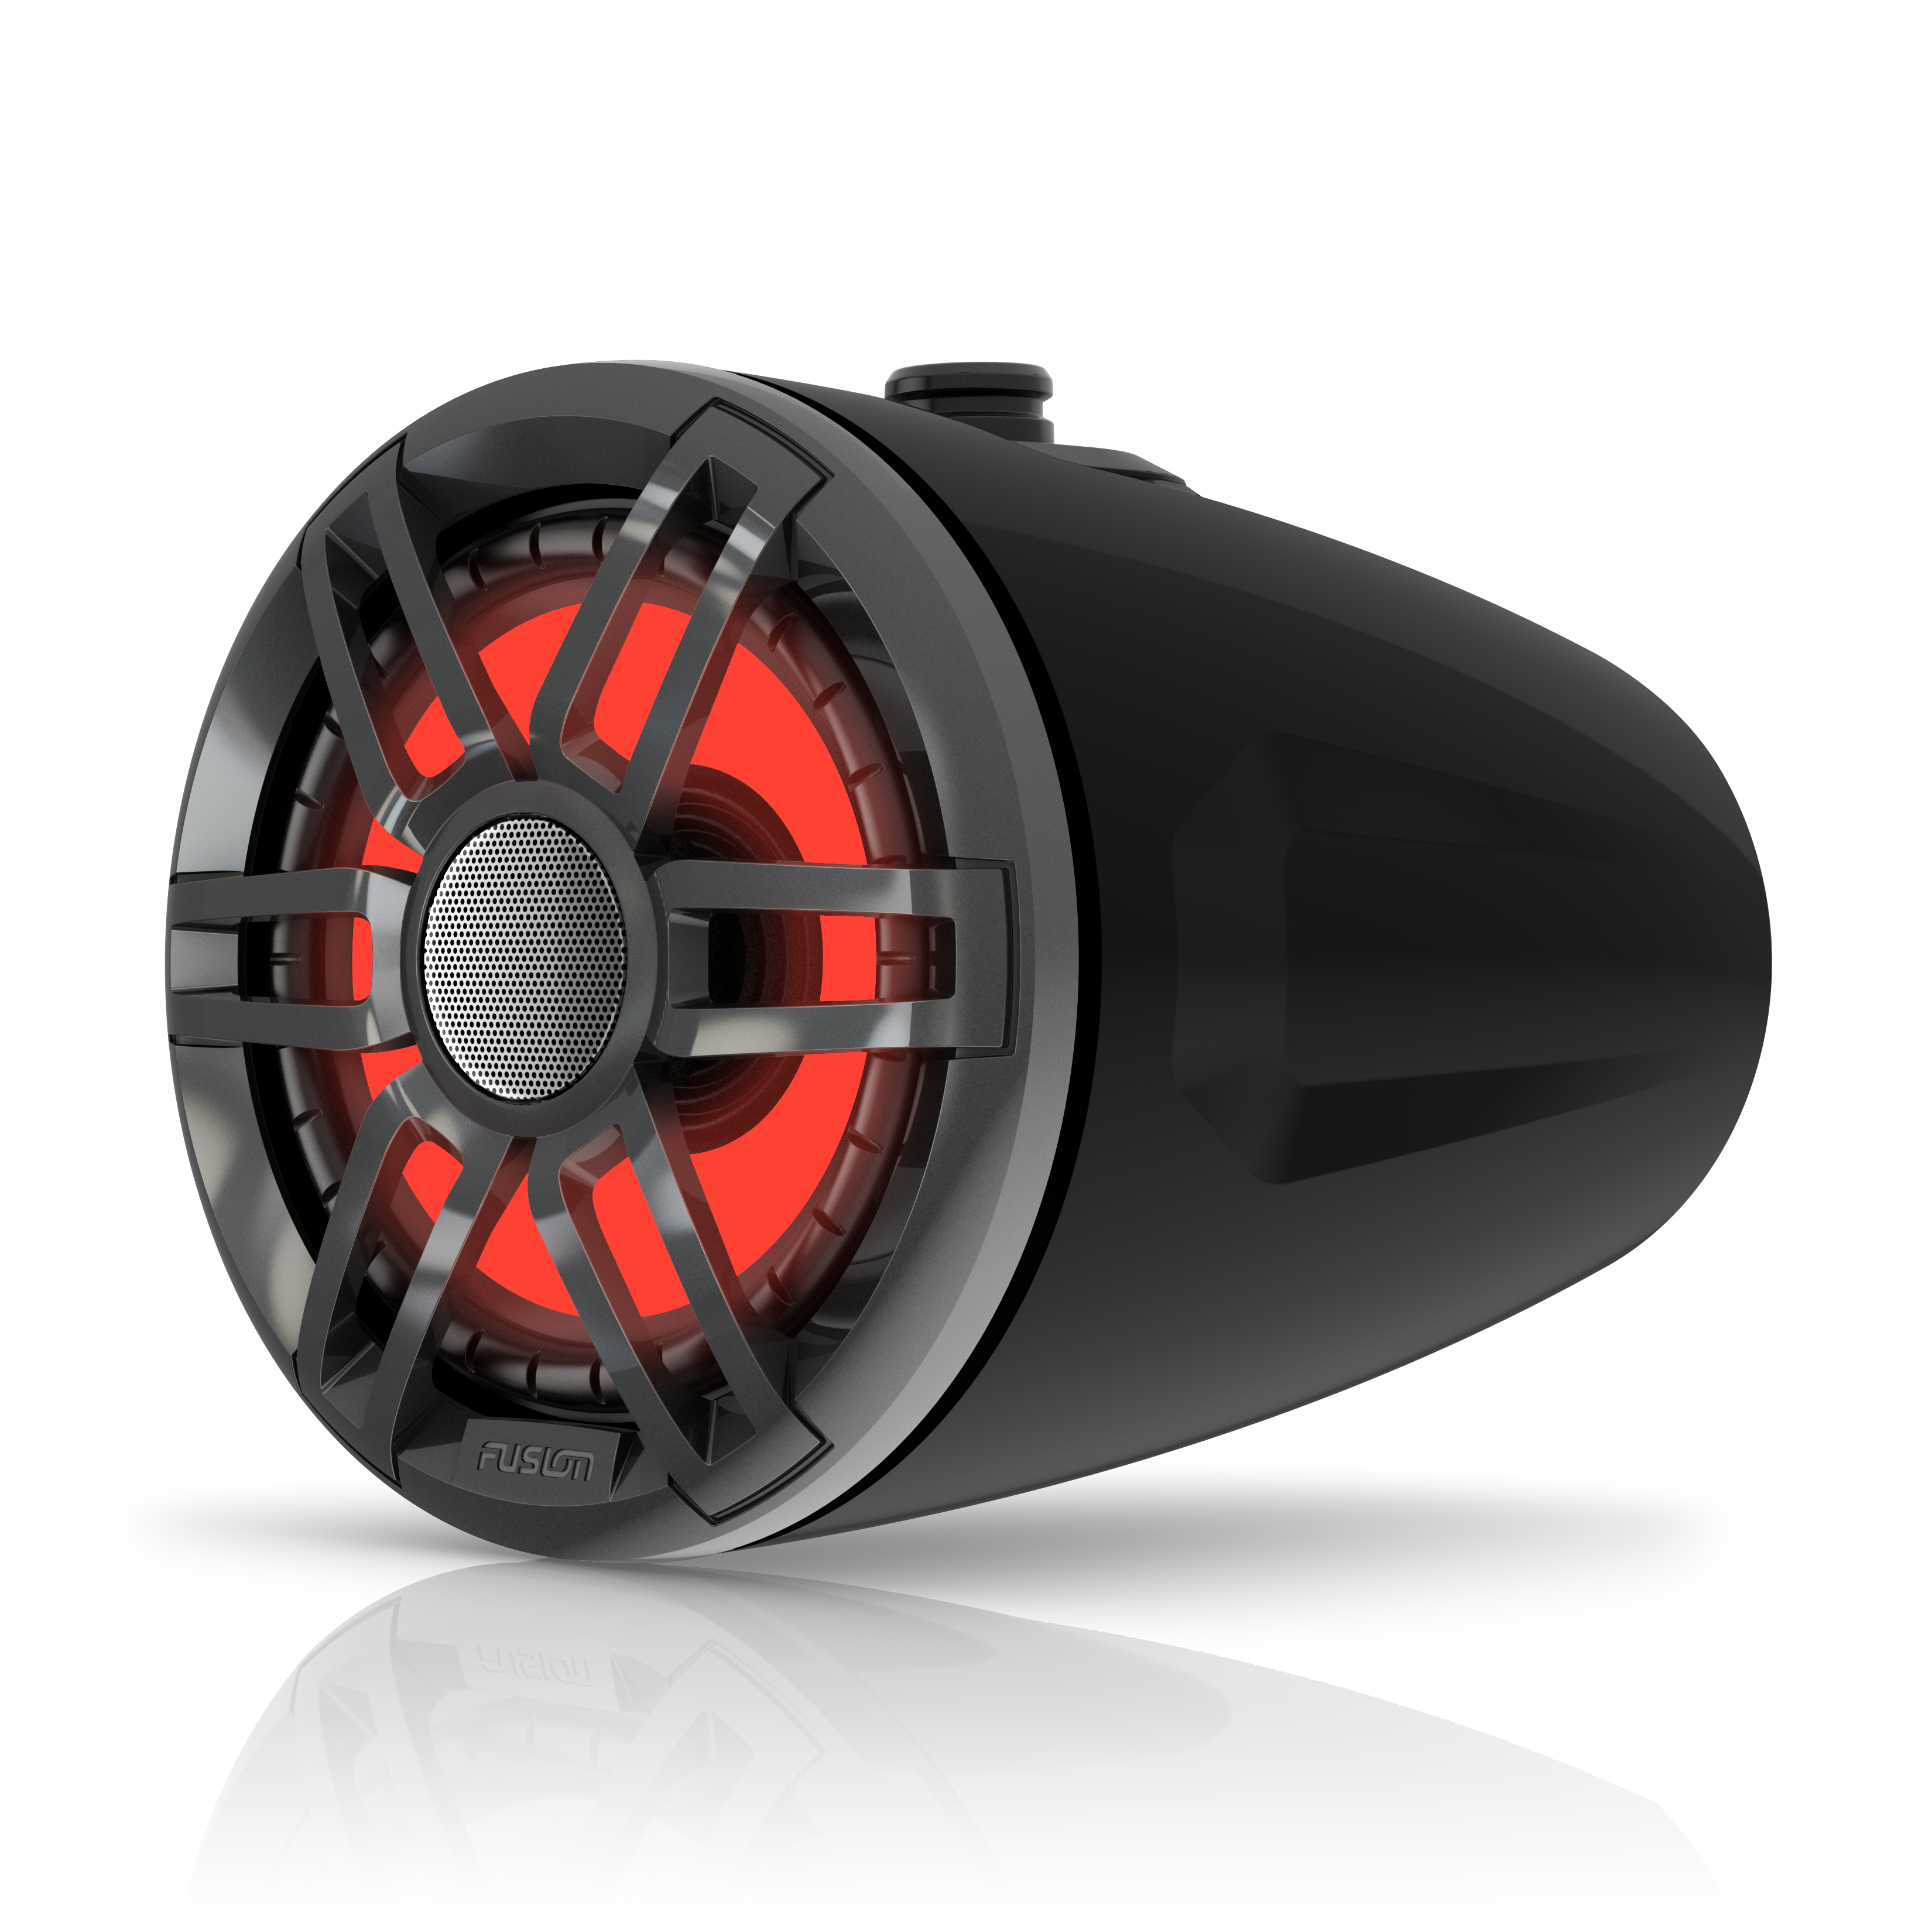 Garmin Fusion® XS Series Wake Tower Marinehøjttalere, 6,5" 200 watt Sports Black wake tower marinehøjttaler med RGB LED-belysning